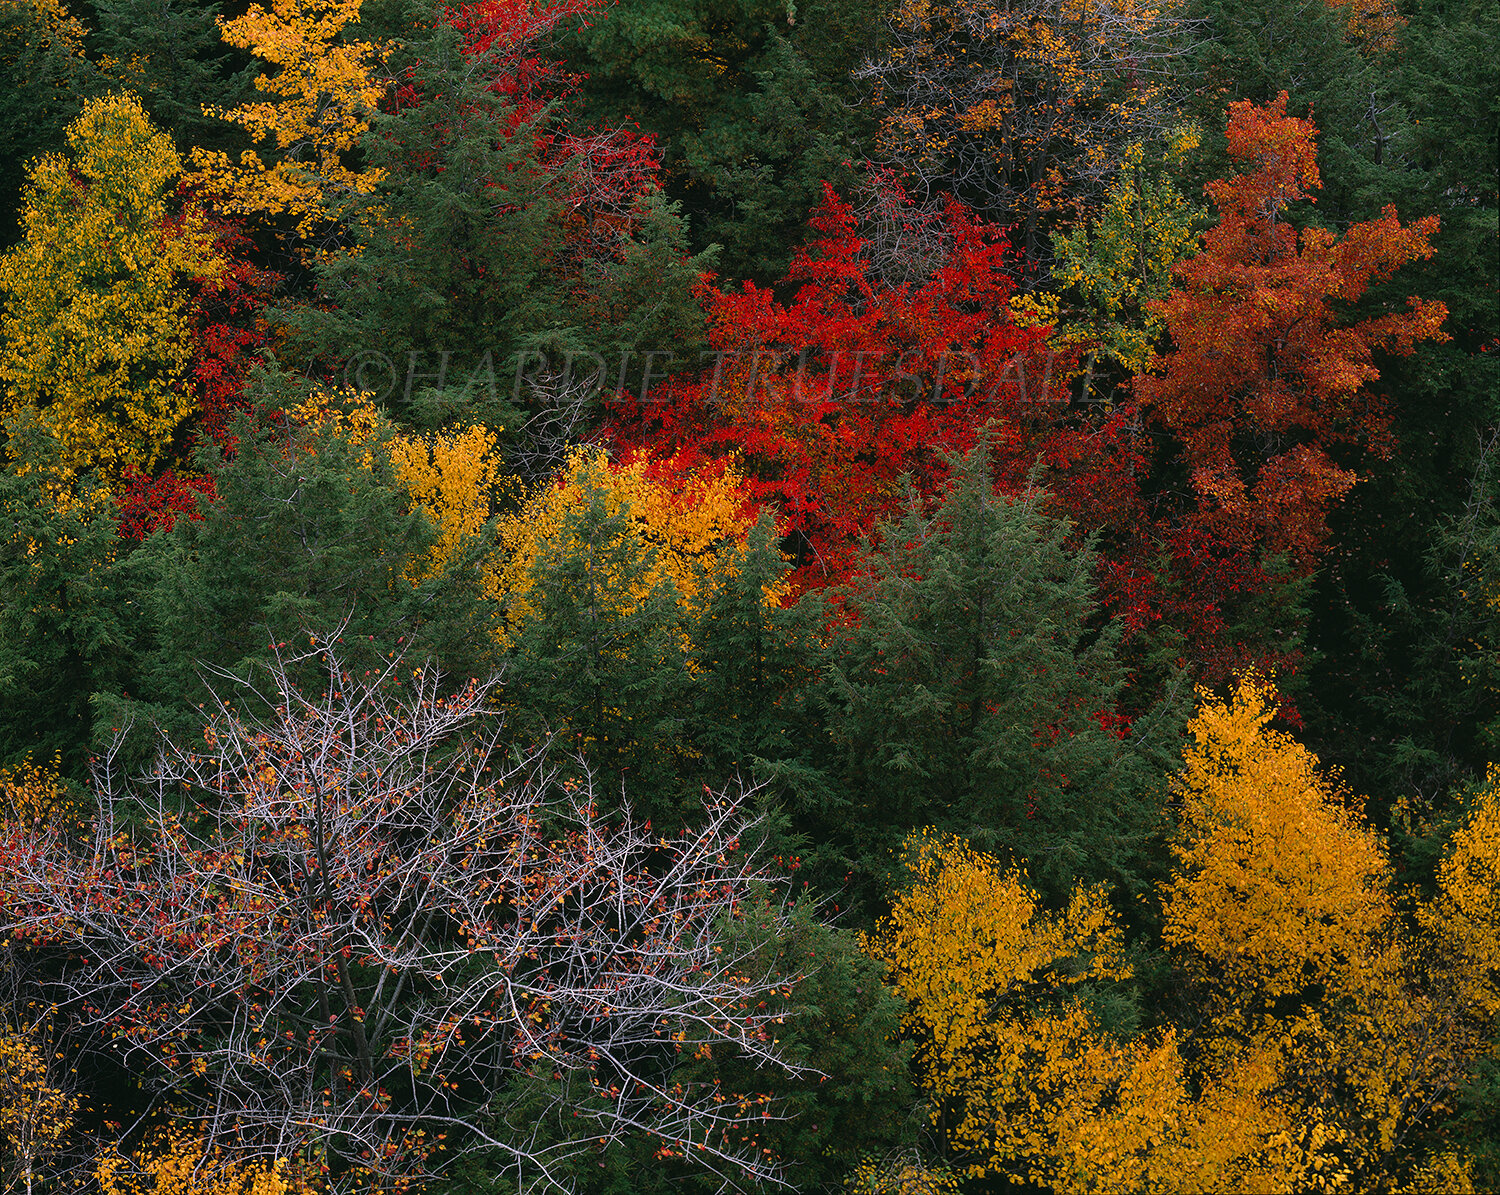 Gks#197 "Fall Maples, Minnewaska State Park"